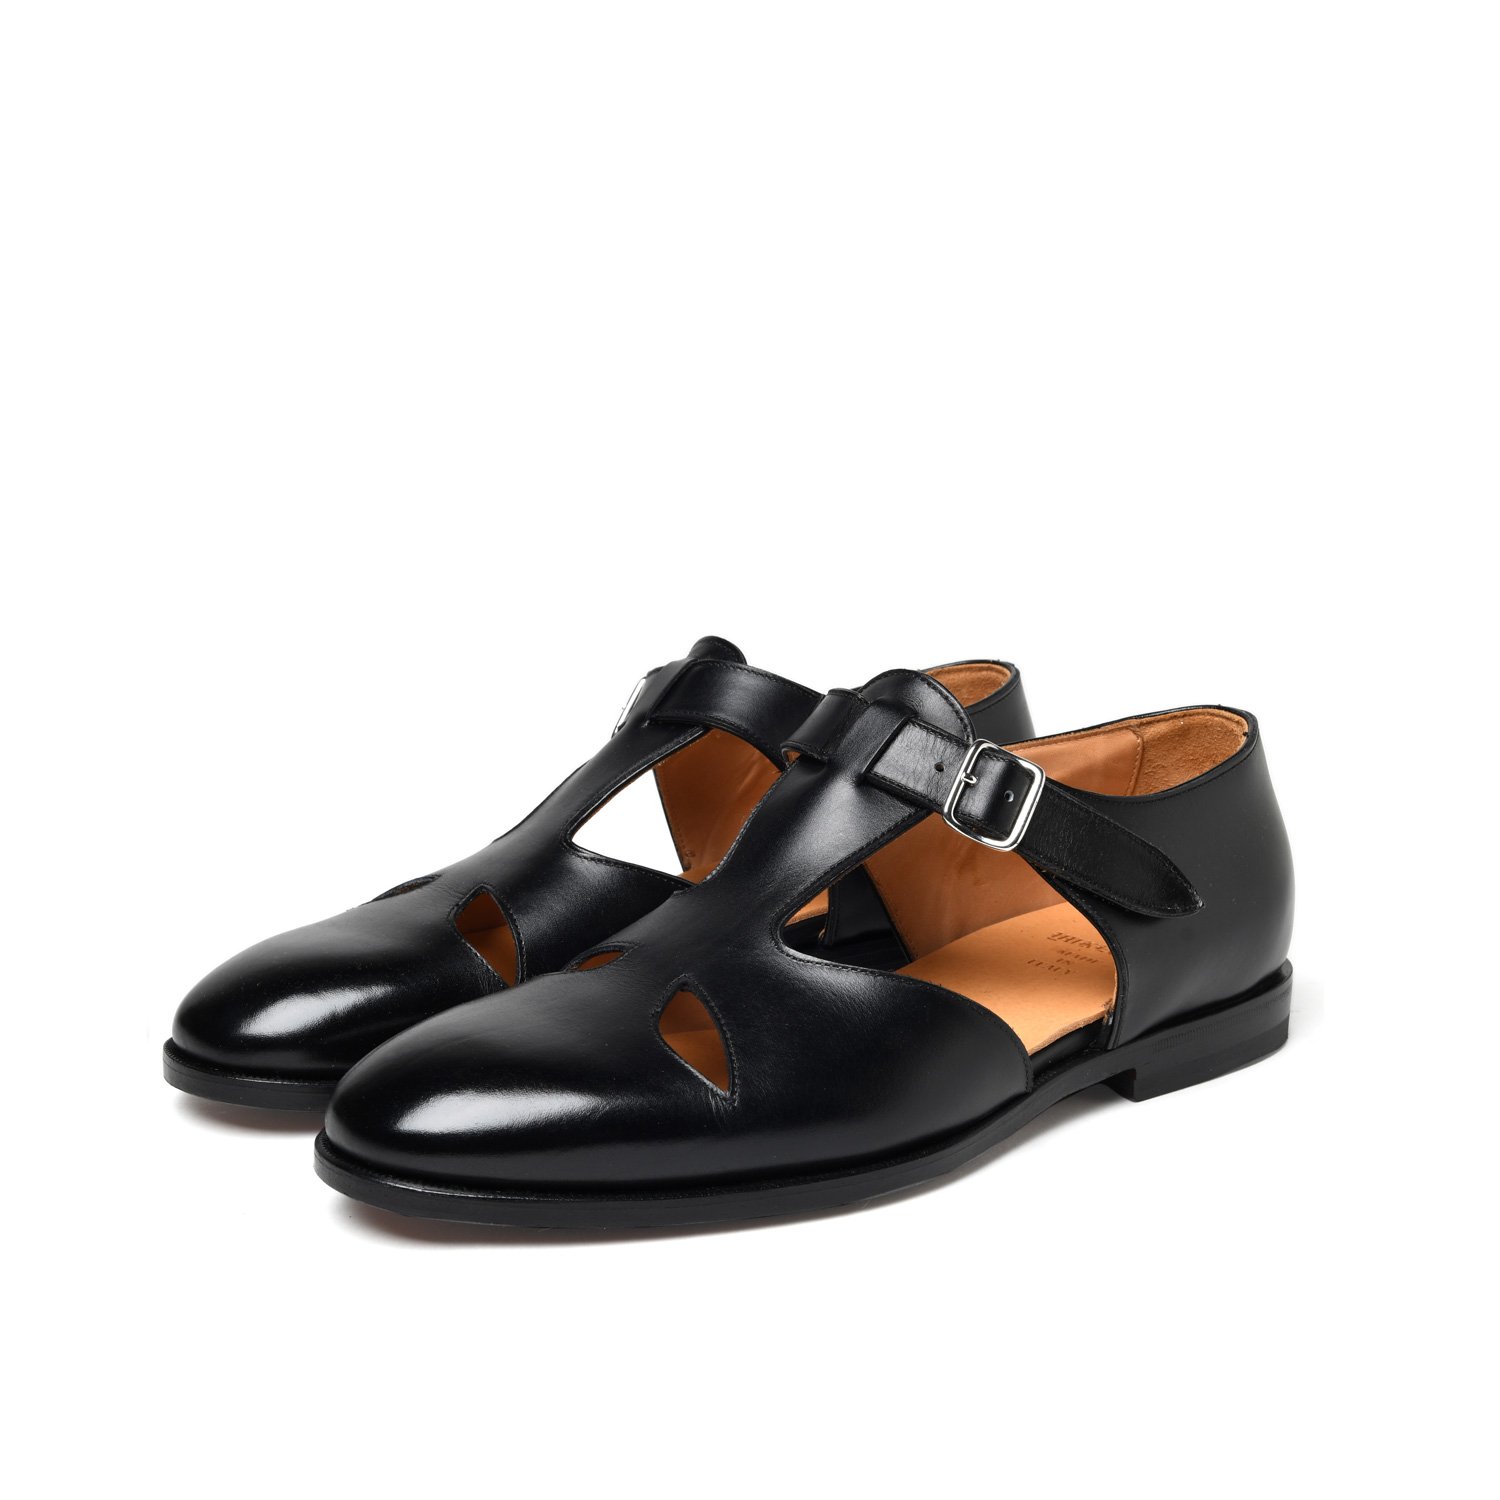 David-Summer-Shoe,-Freudenberg-Box-Calf-Black.jpg